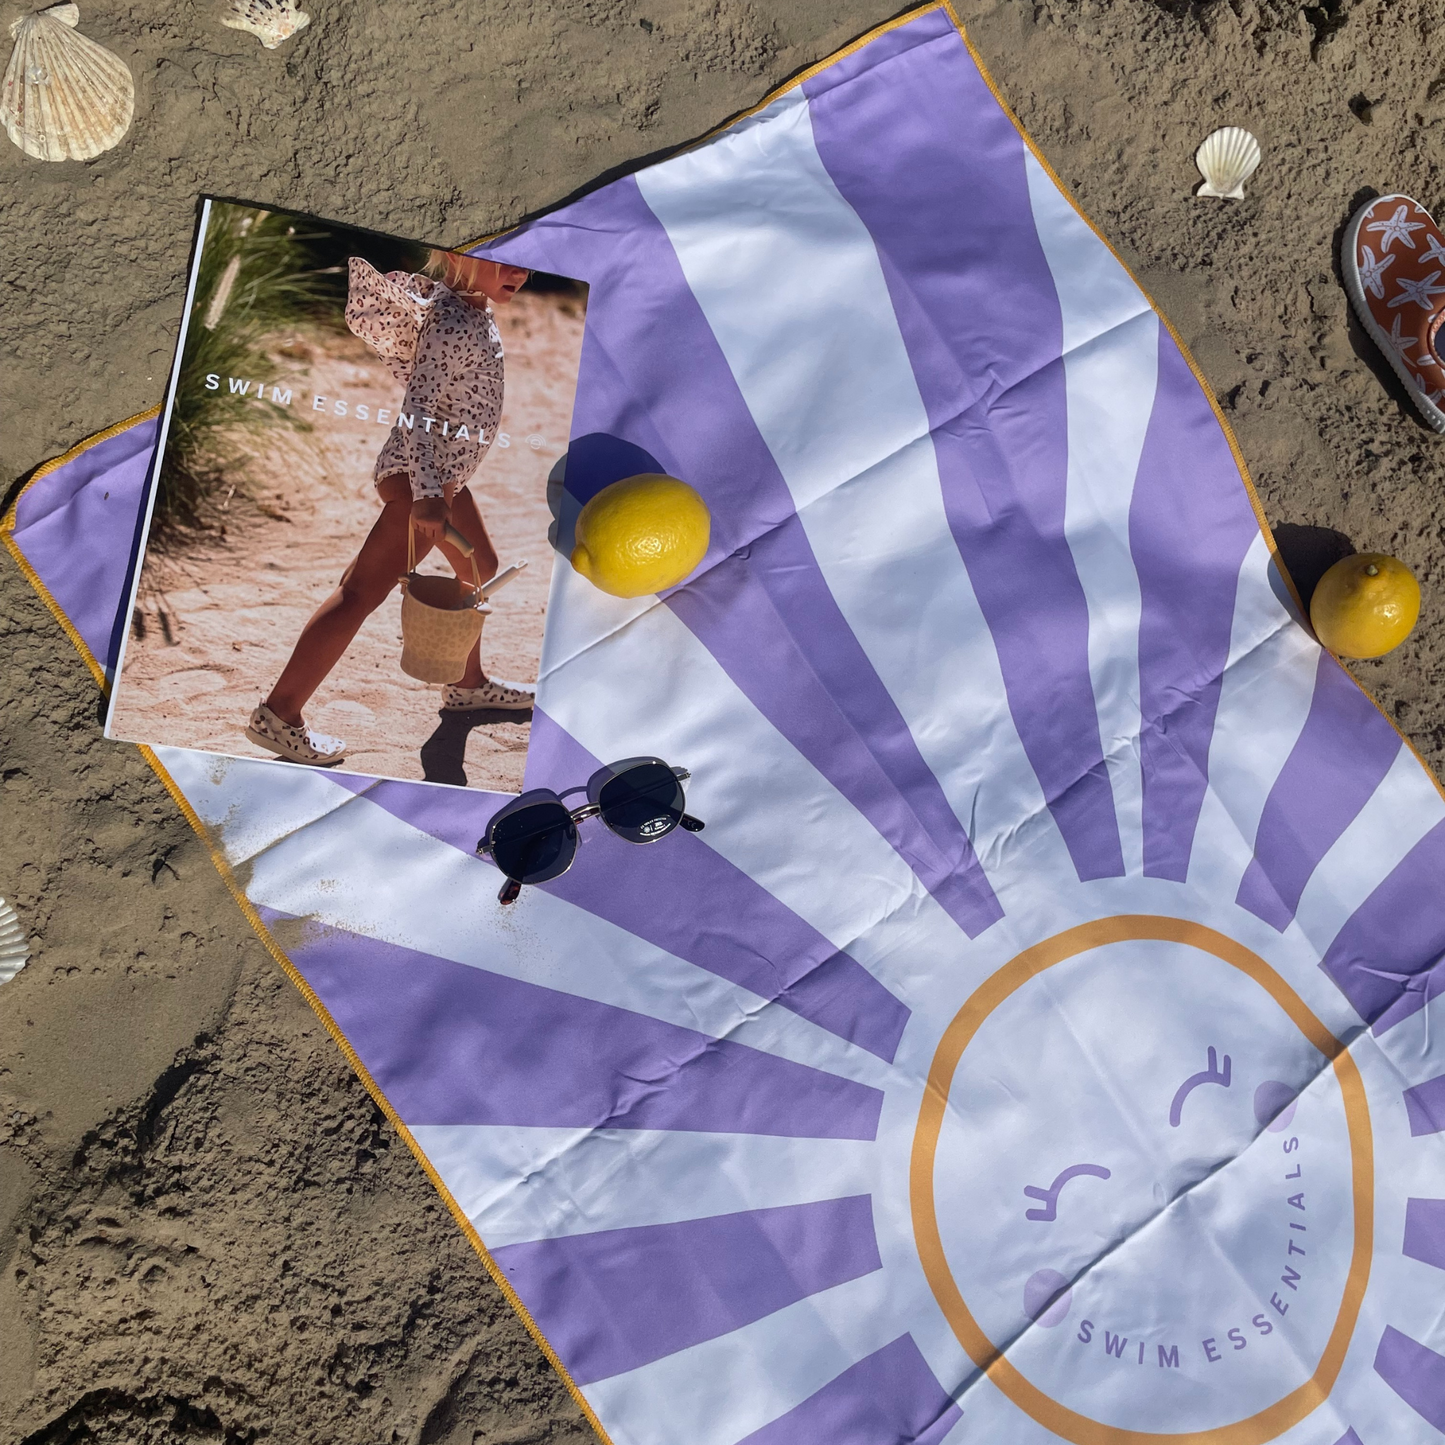 SE Microvezel Handdoek Happy Sunshine 135 x 65 cm